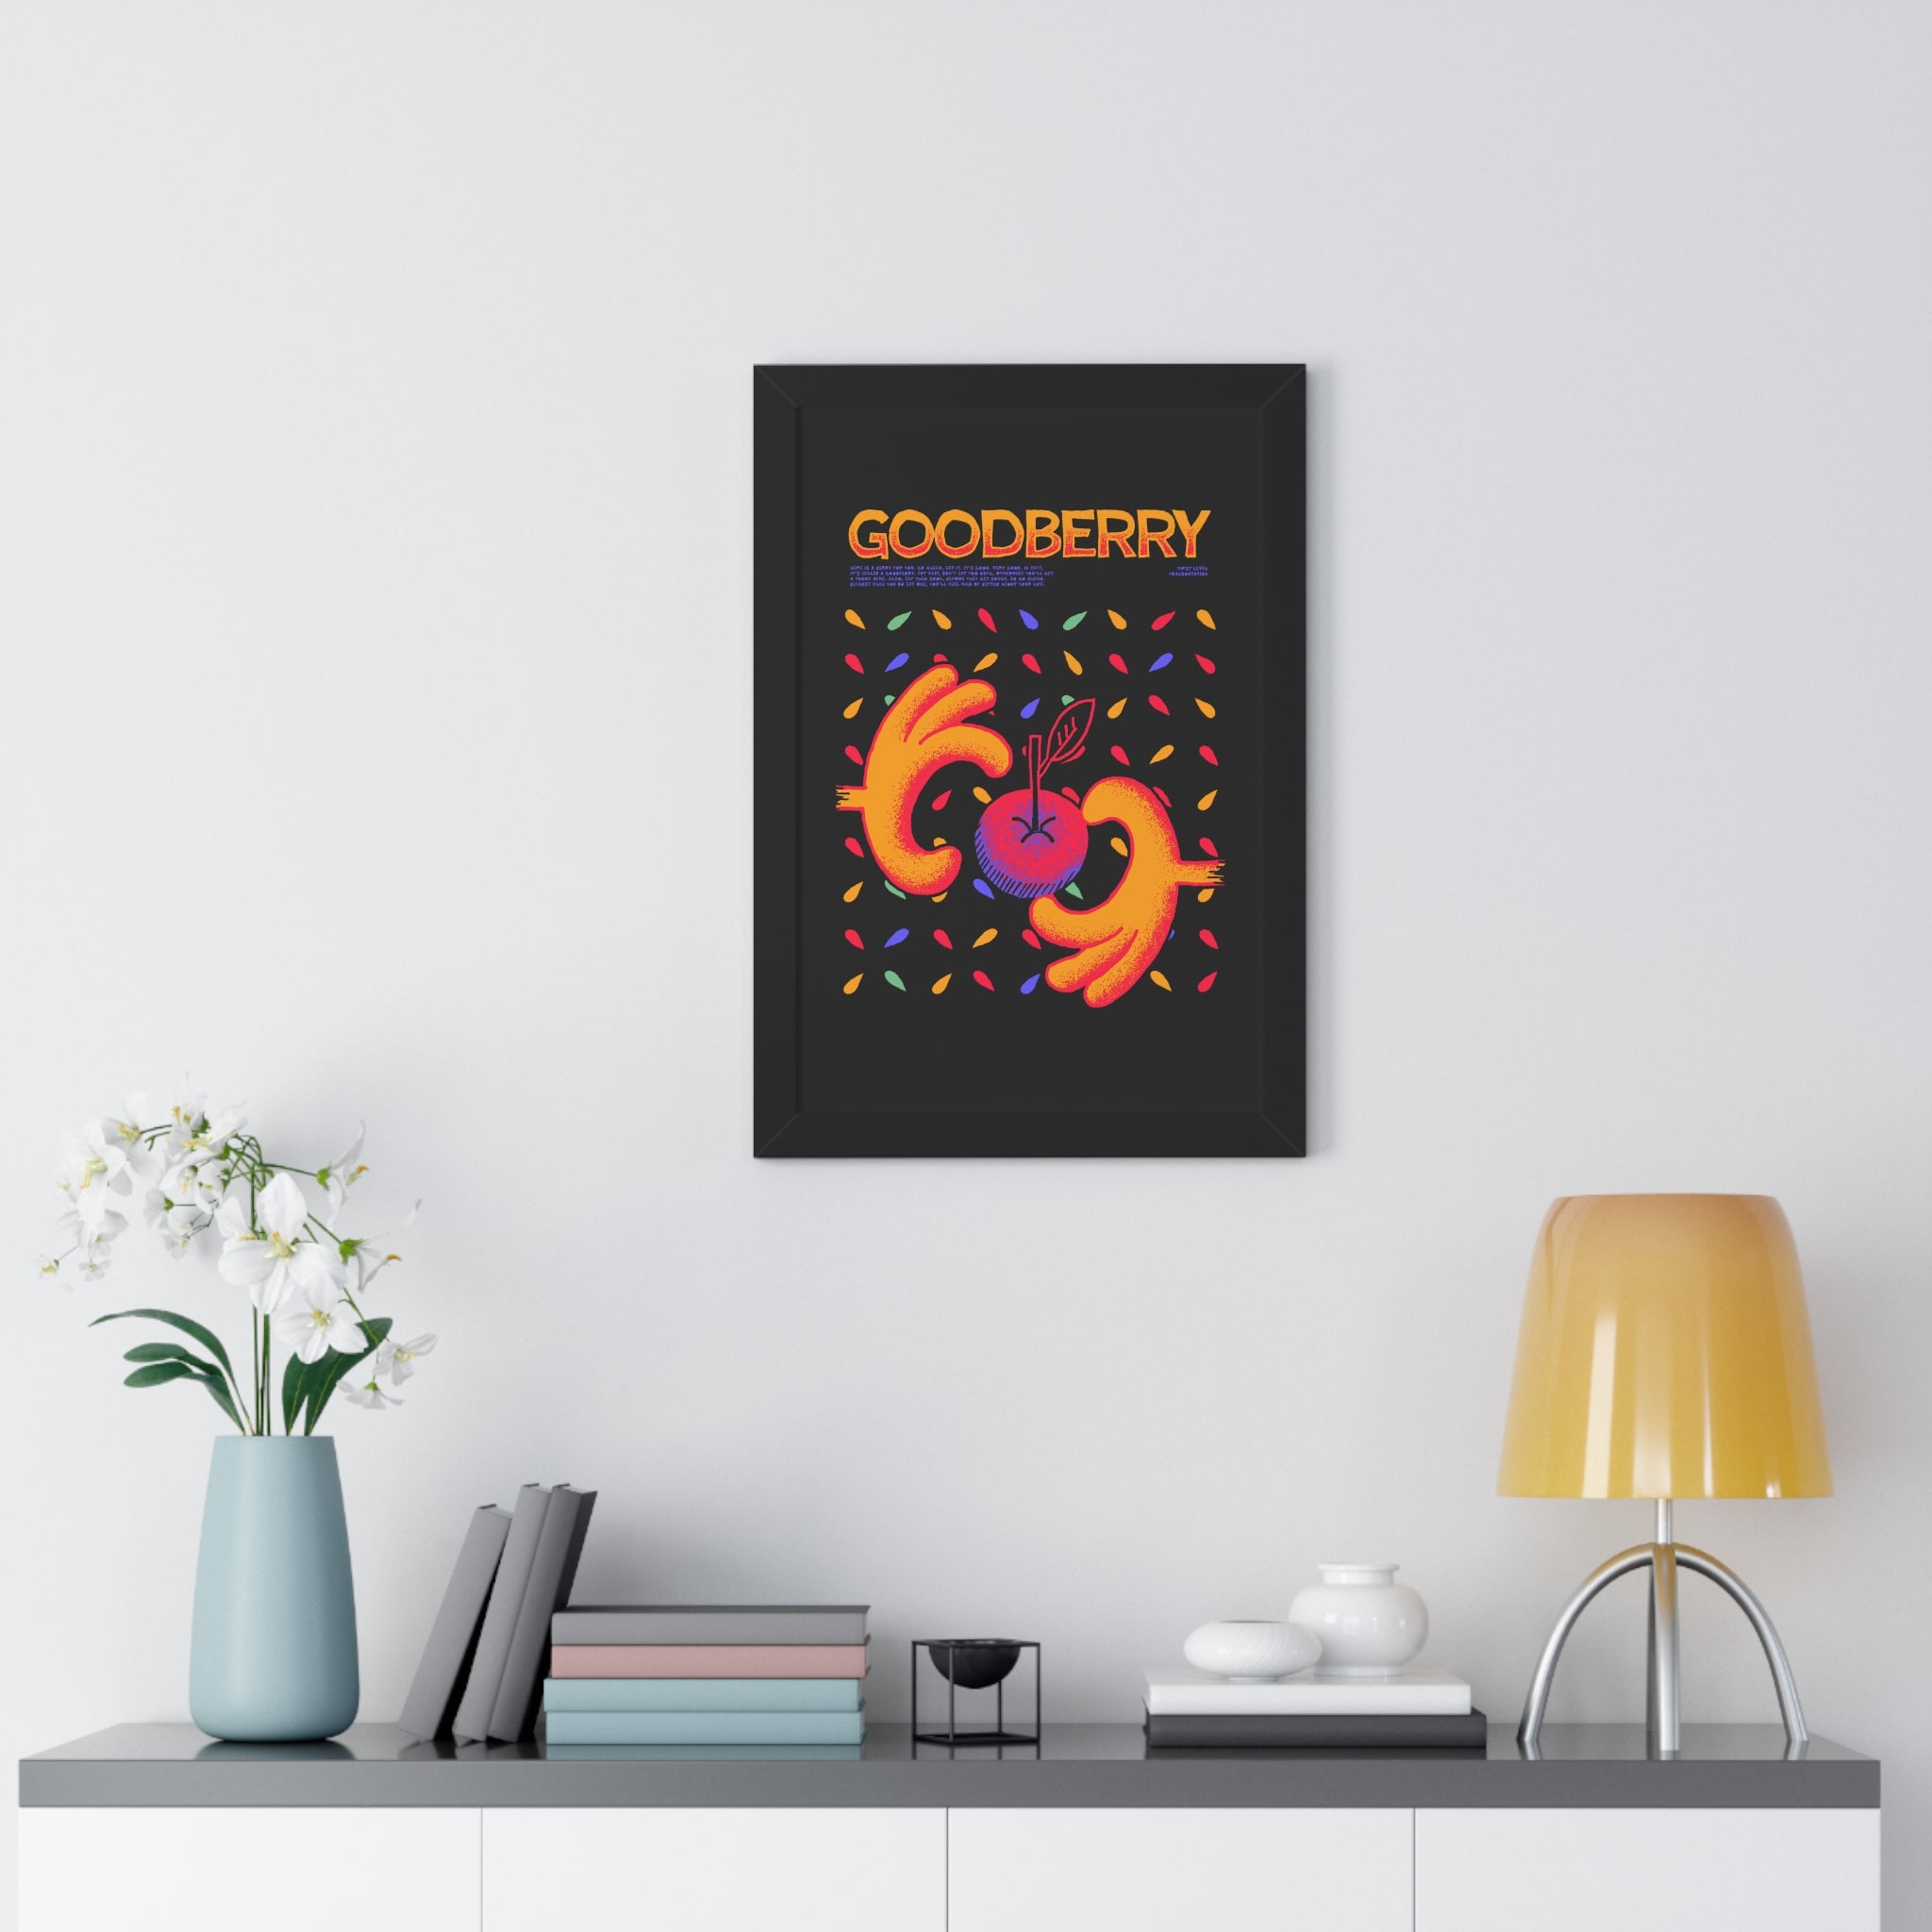 Goodberry | Framed Poster - Framed Poster - Ace of Gnomes - 31920125898934167482